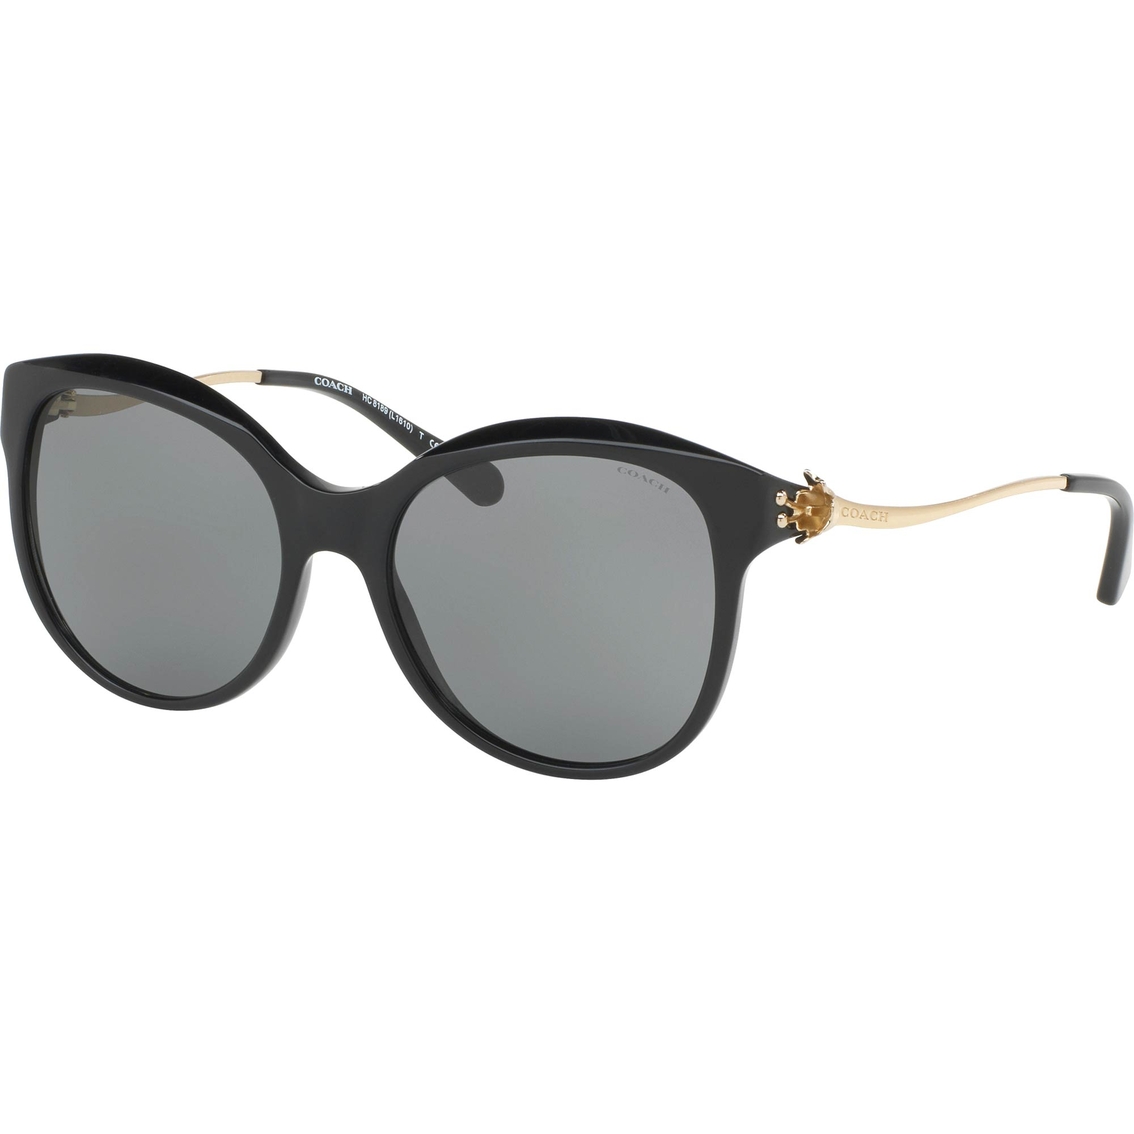 Coach Sunglasses 0hc8189 | Women's Sunglasses | Clothing & Accessories ...